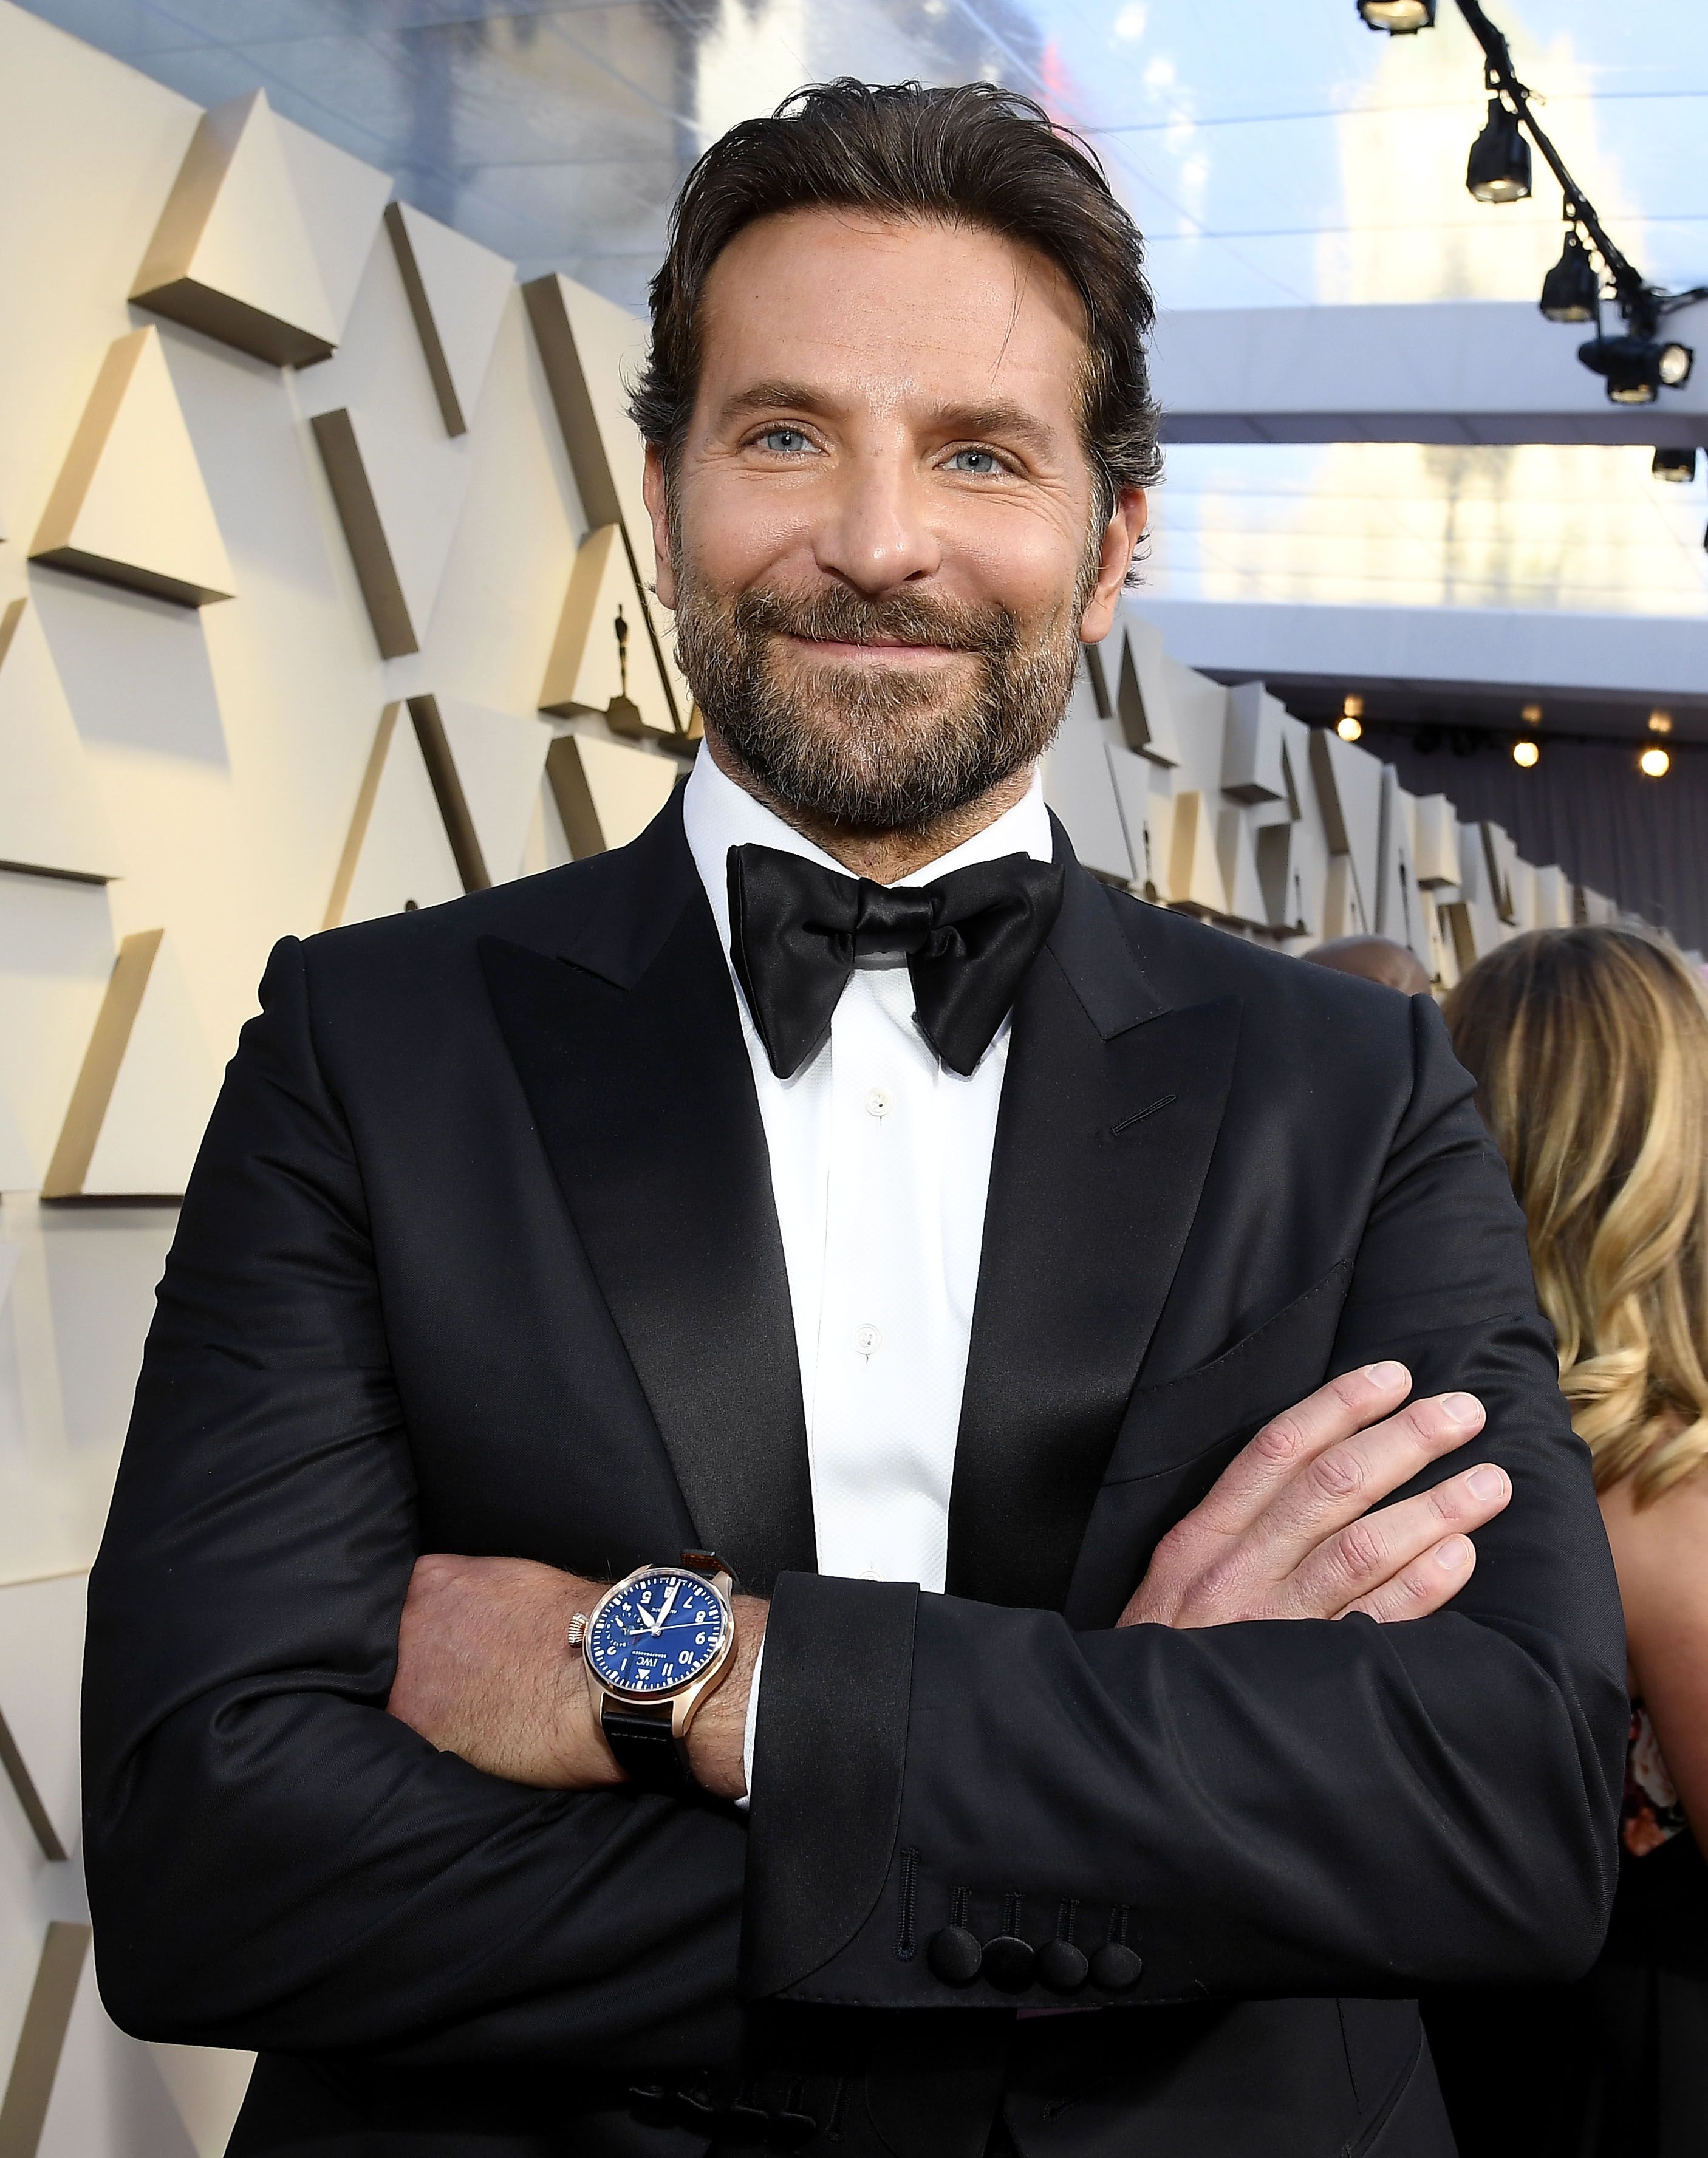 Bradley Cooper Oscars Snub - Bradley Cooper Loses Best Actor Award